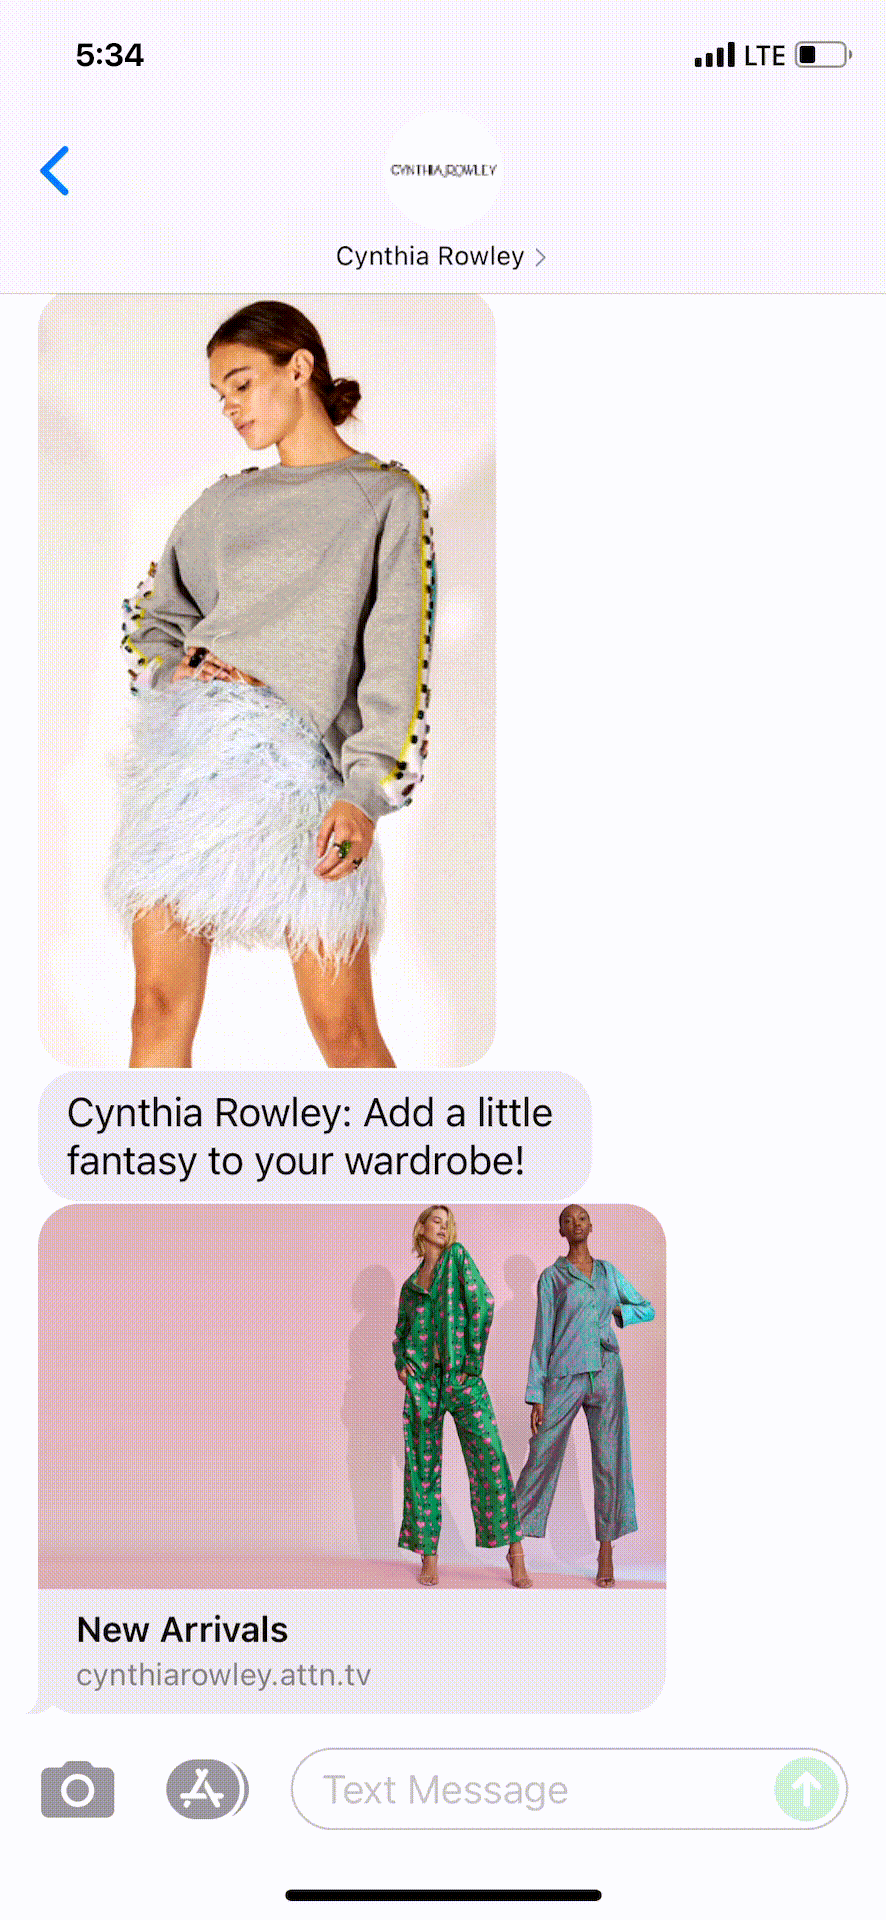 Cynthia-Rowley-Text-Message-Marketing-Example-10.09.2021